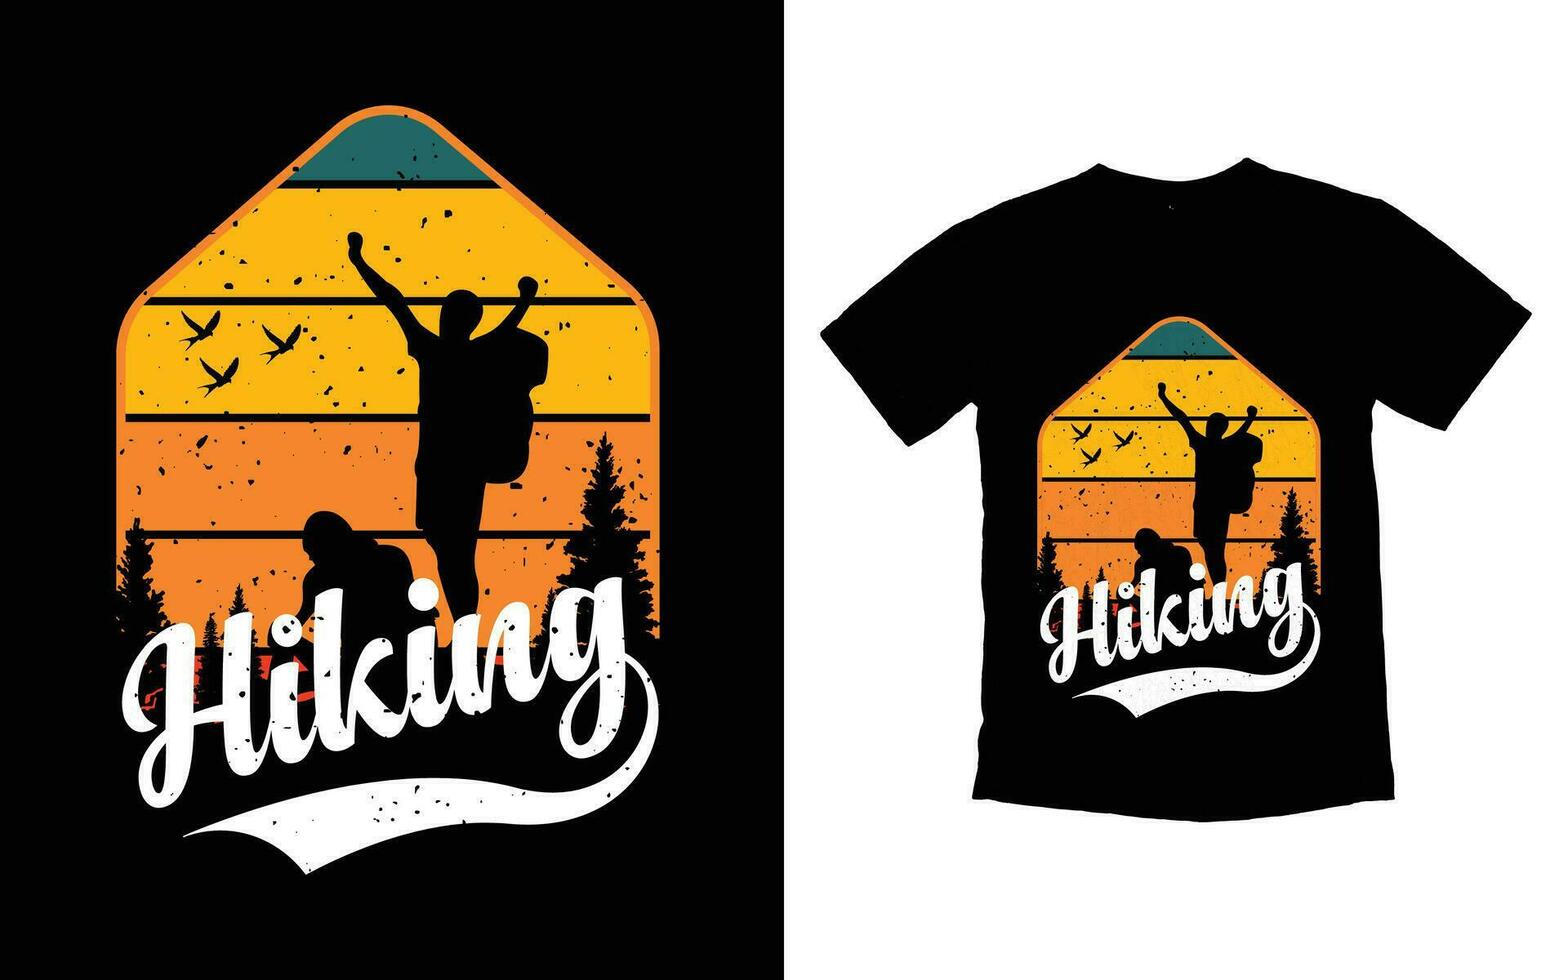 Hiking adventure typography t-shirt design vector